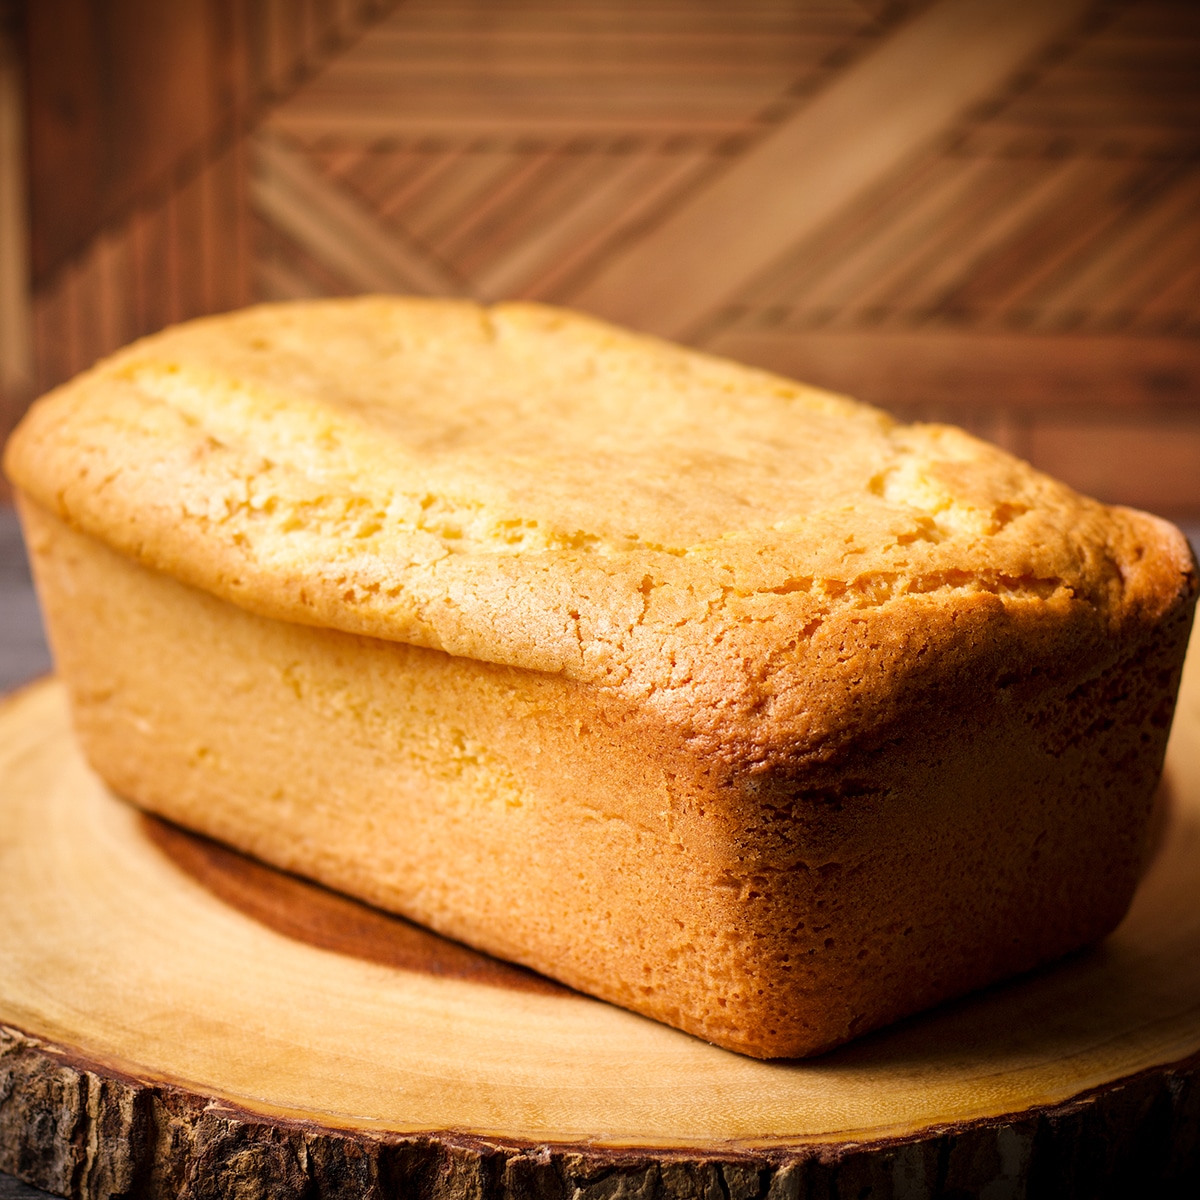 A vanilla loaf cake resting on a wood cutting board.